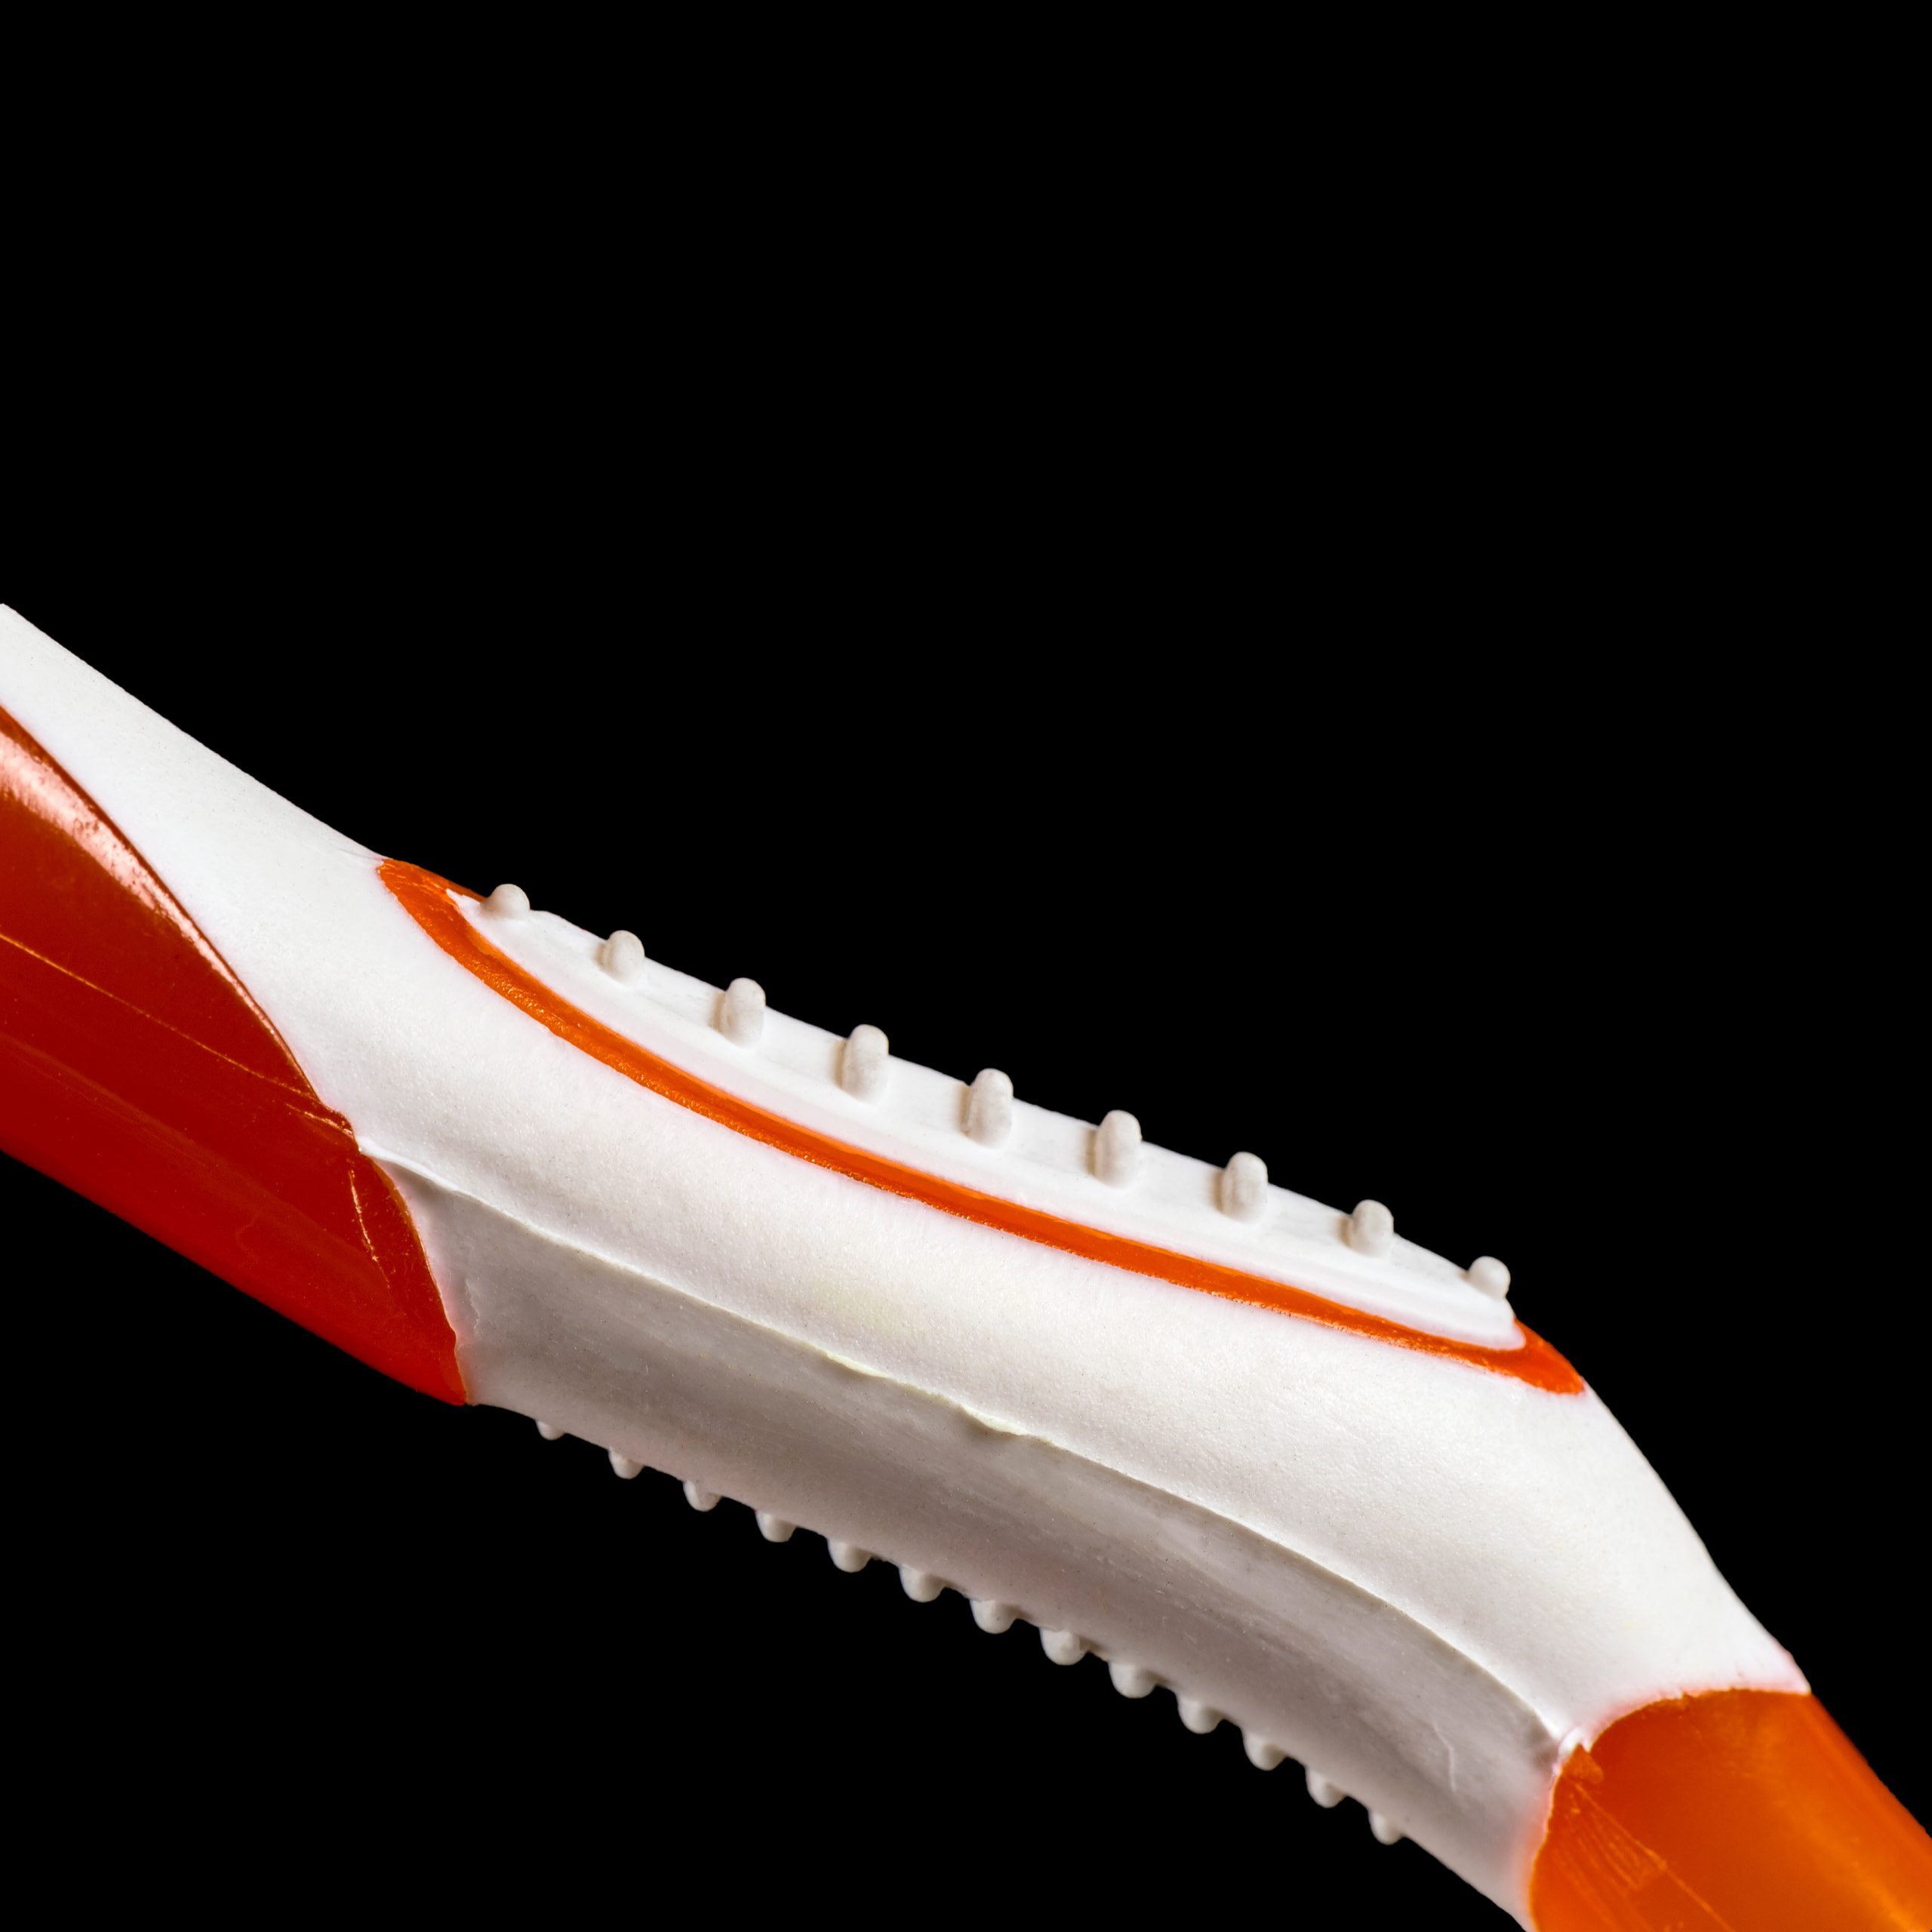 Toothbrushes8_orange-grib-4985-square copy